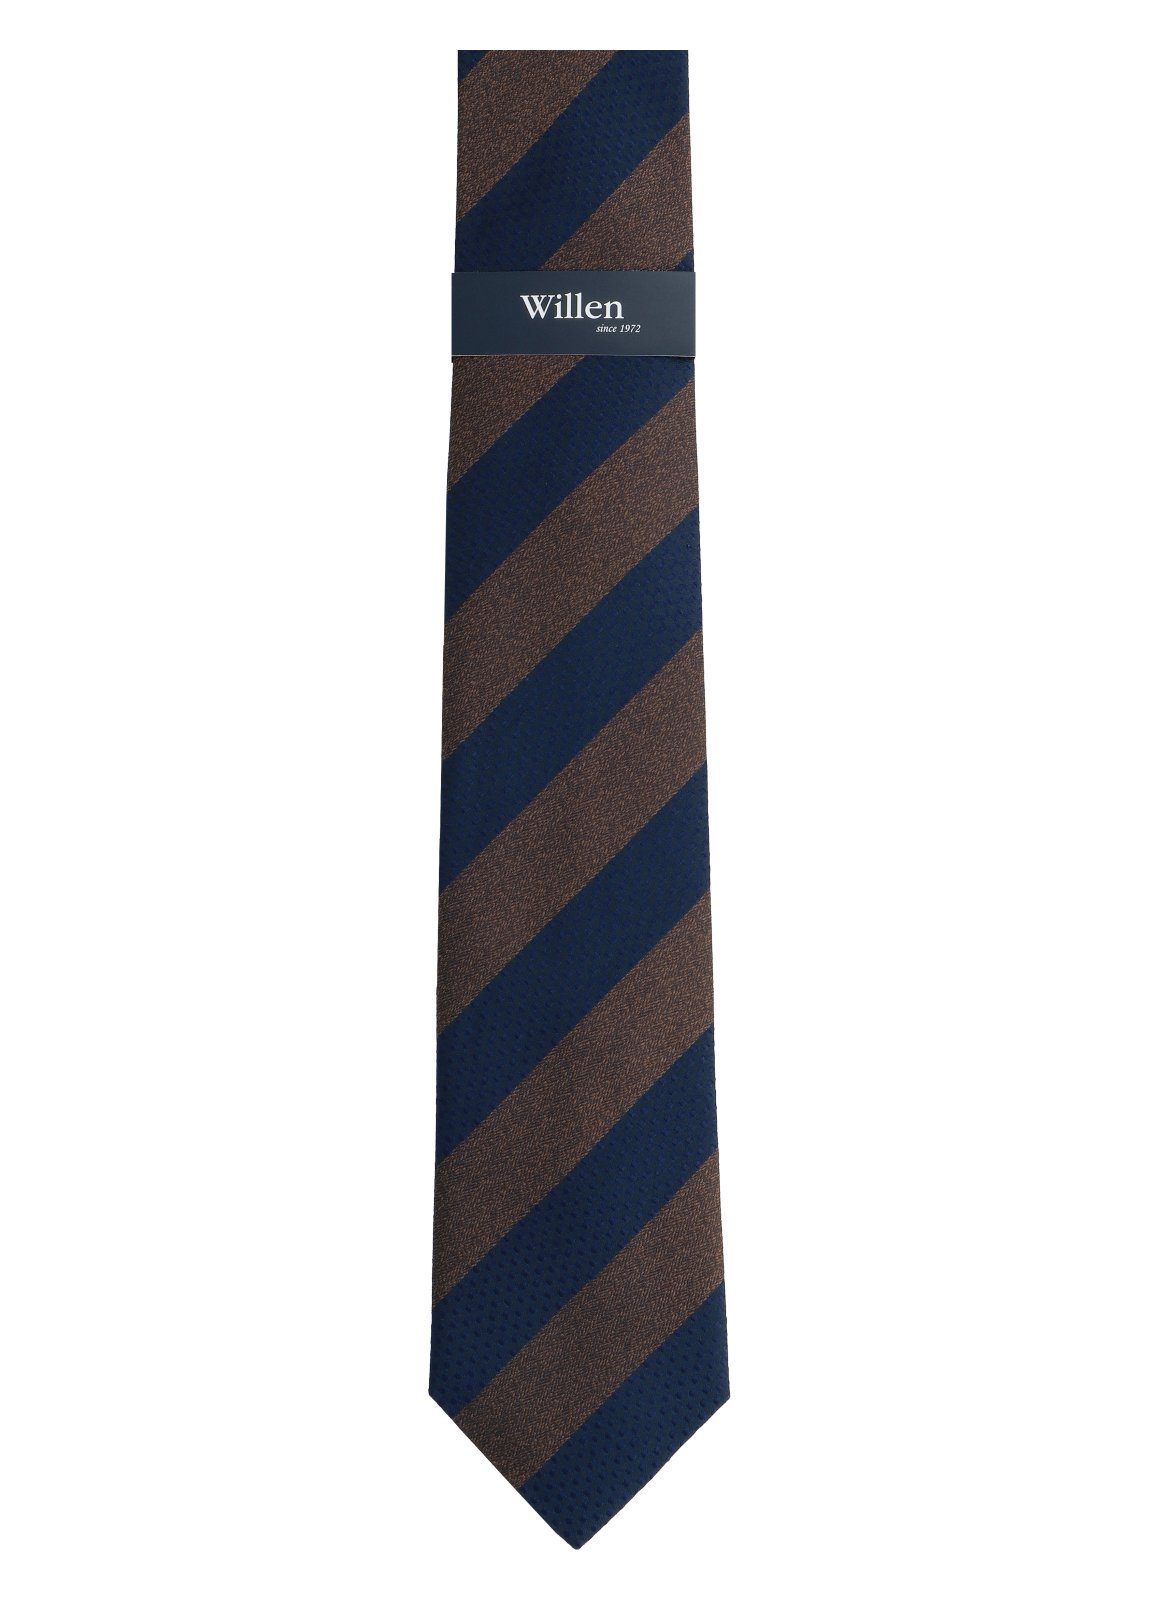 Krawatte WILLEN schoko